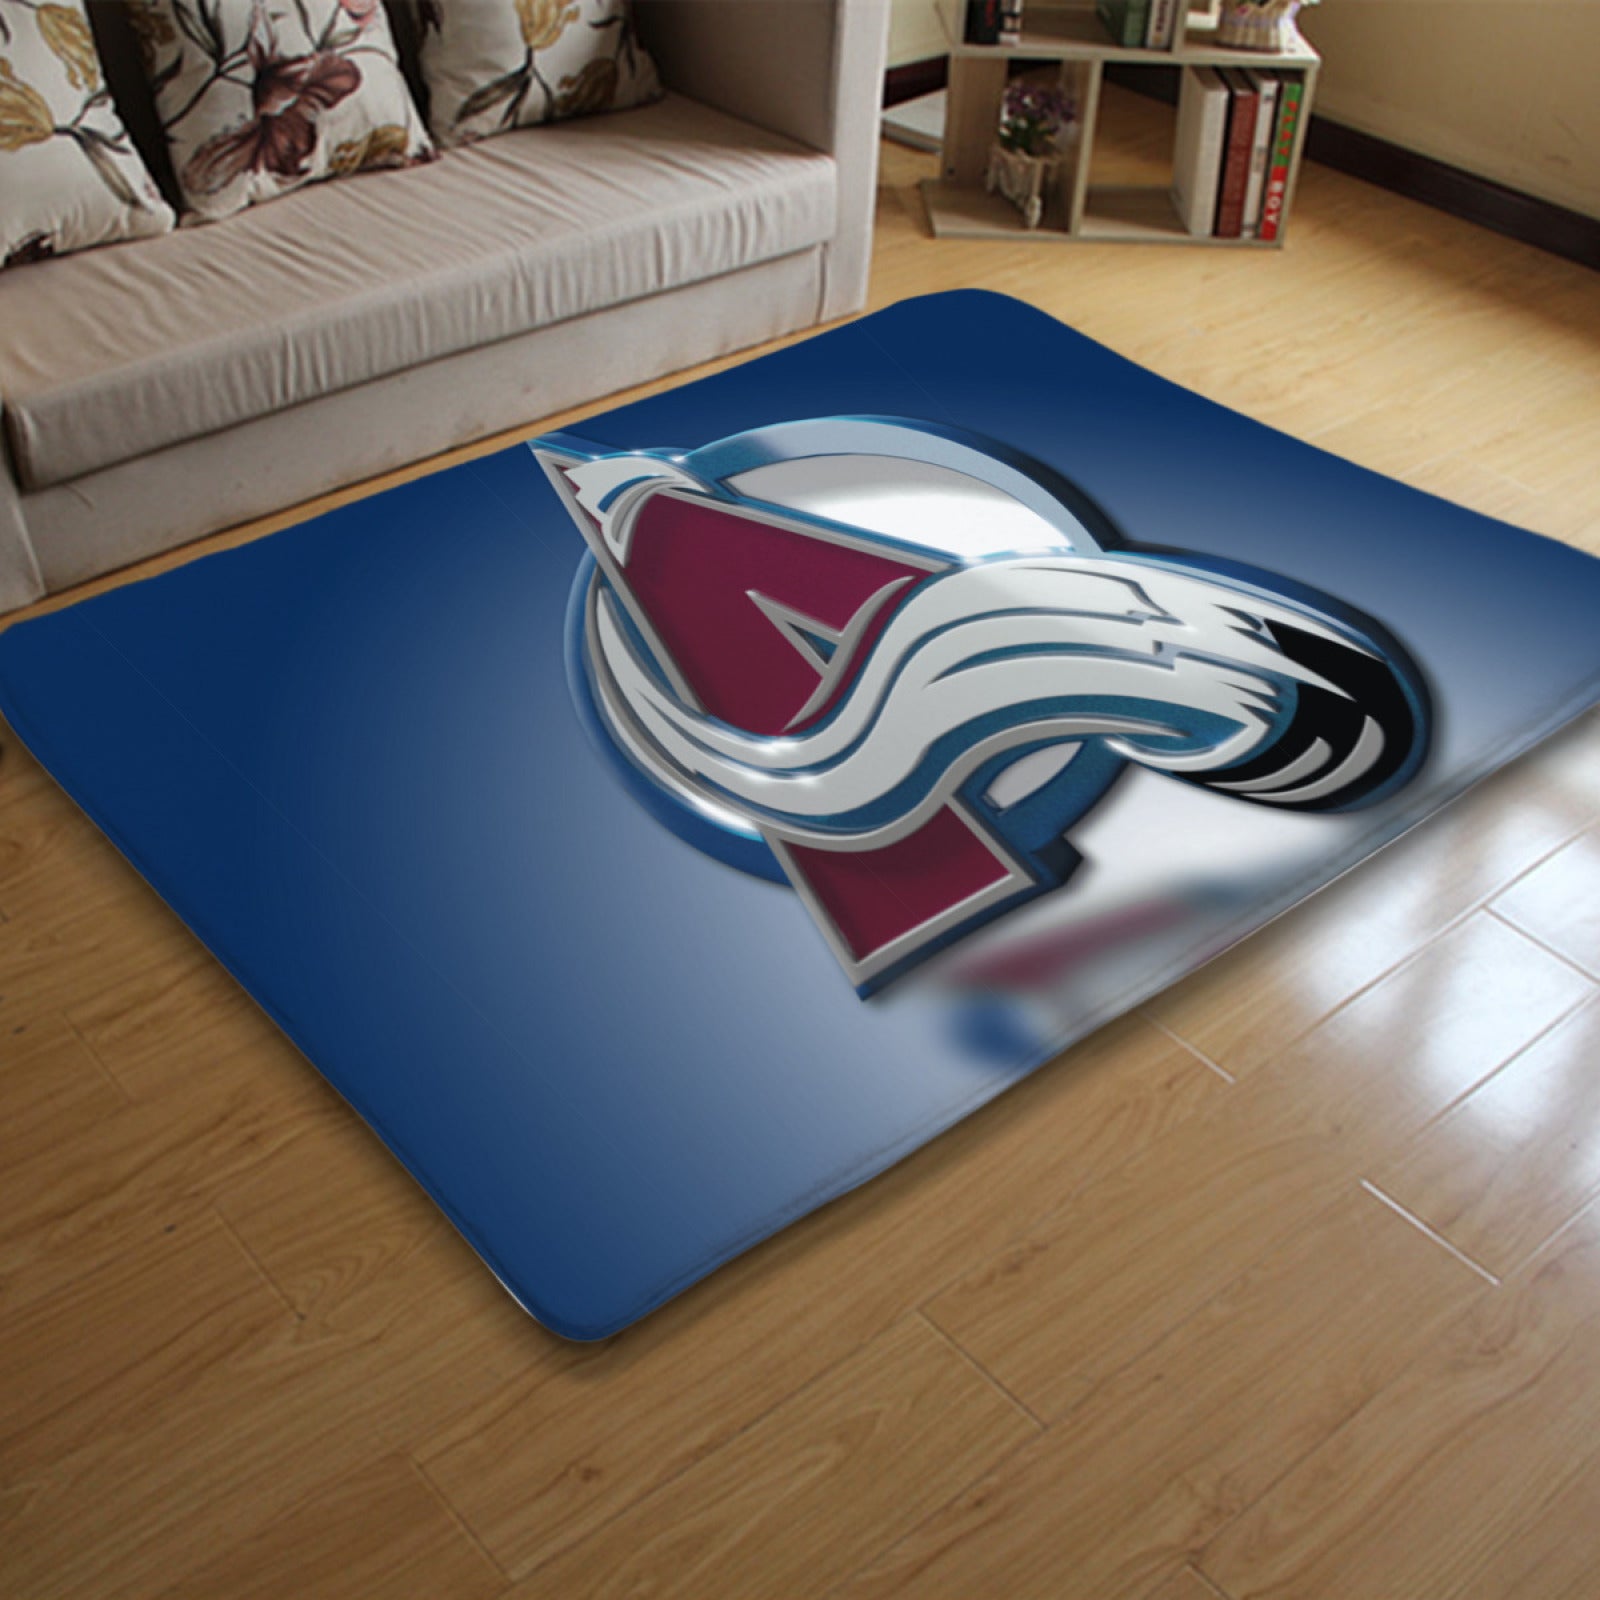 Colorado Avalanche Hockey League Carpet Living Room Bedroom Mats Kitchen Bathroom Rugs